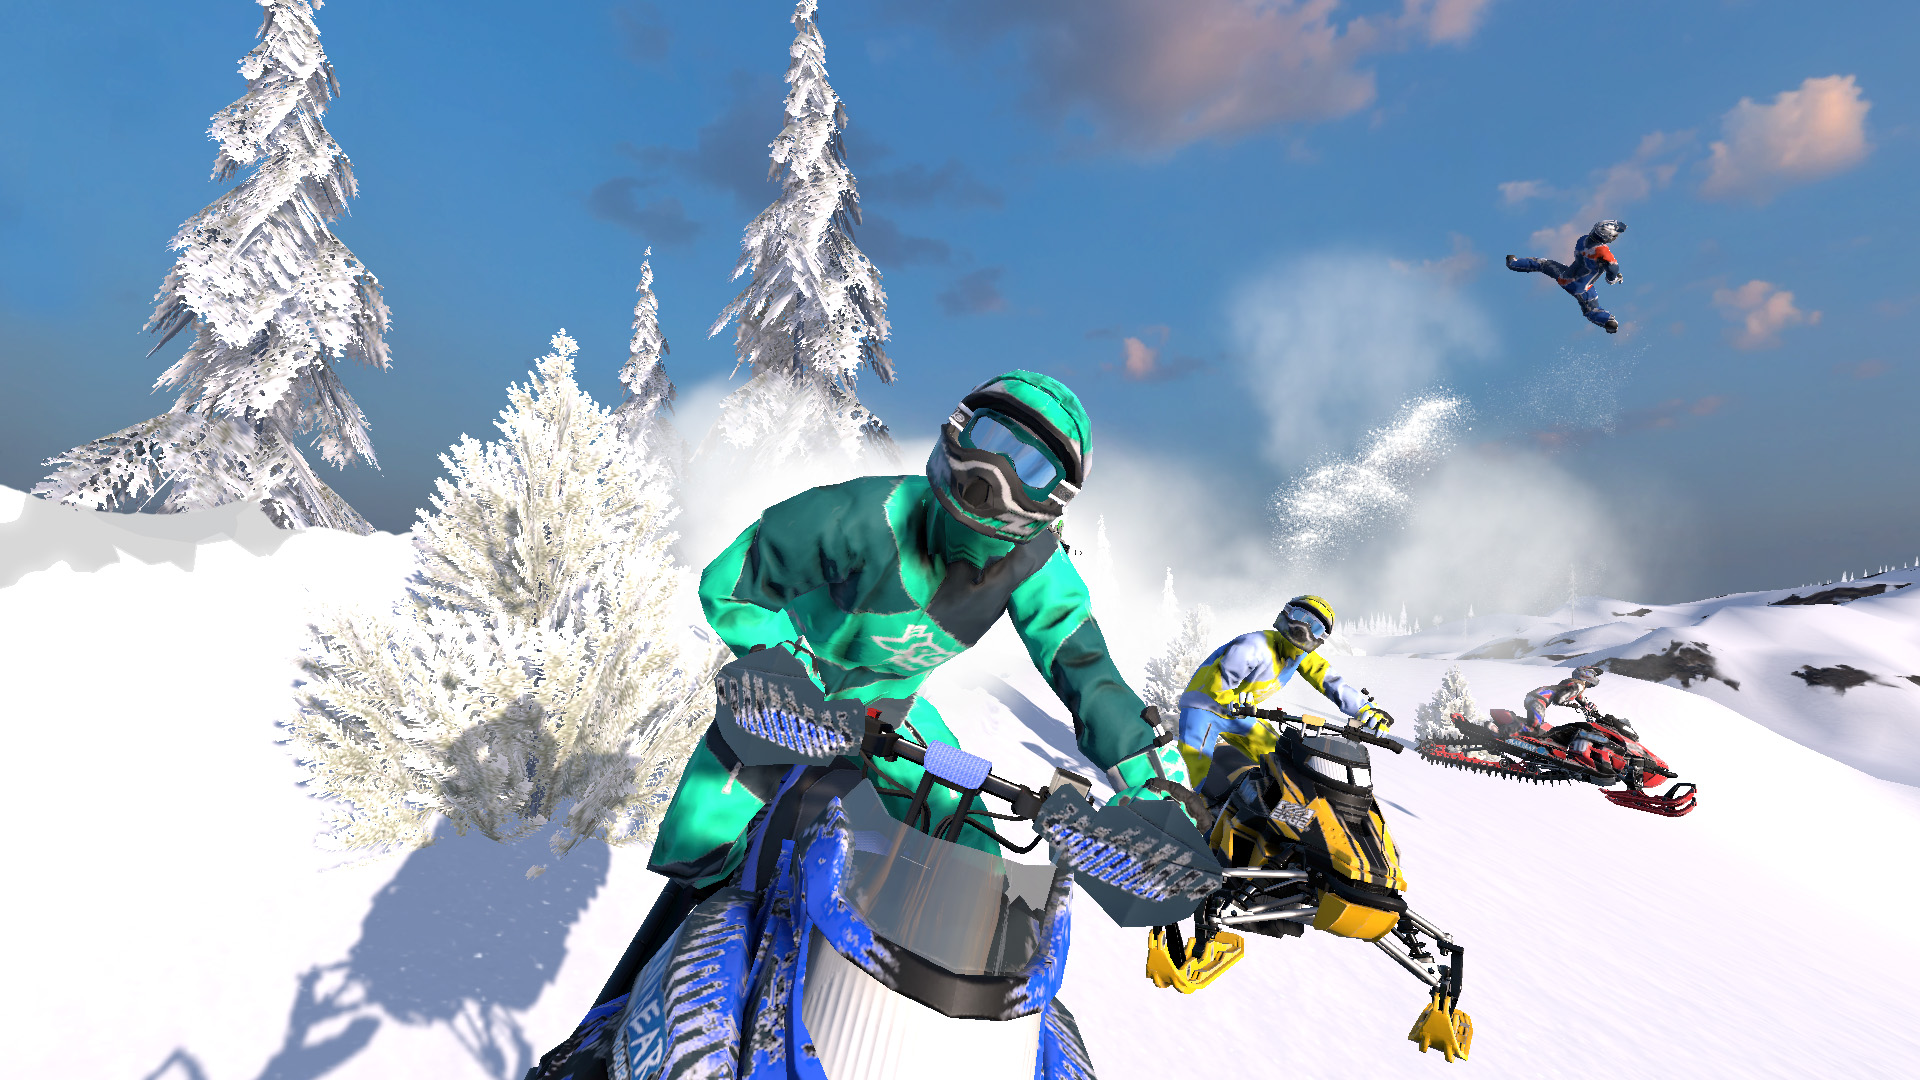 Snow Moto Racing Freedom sur Steam